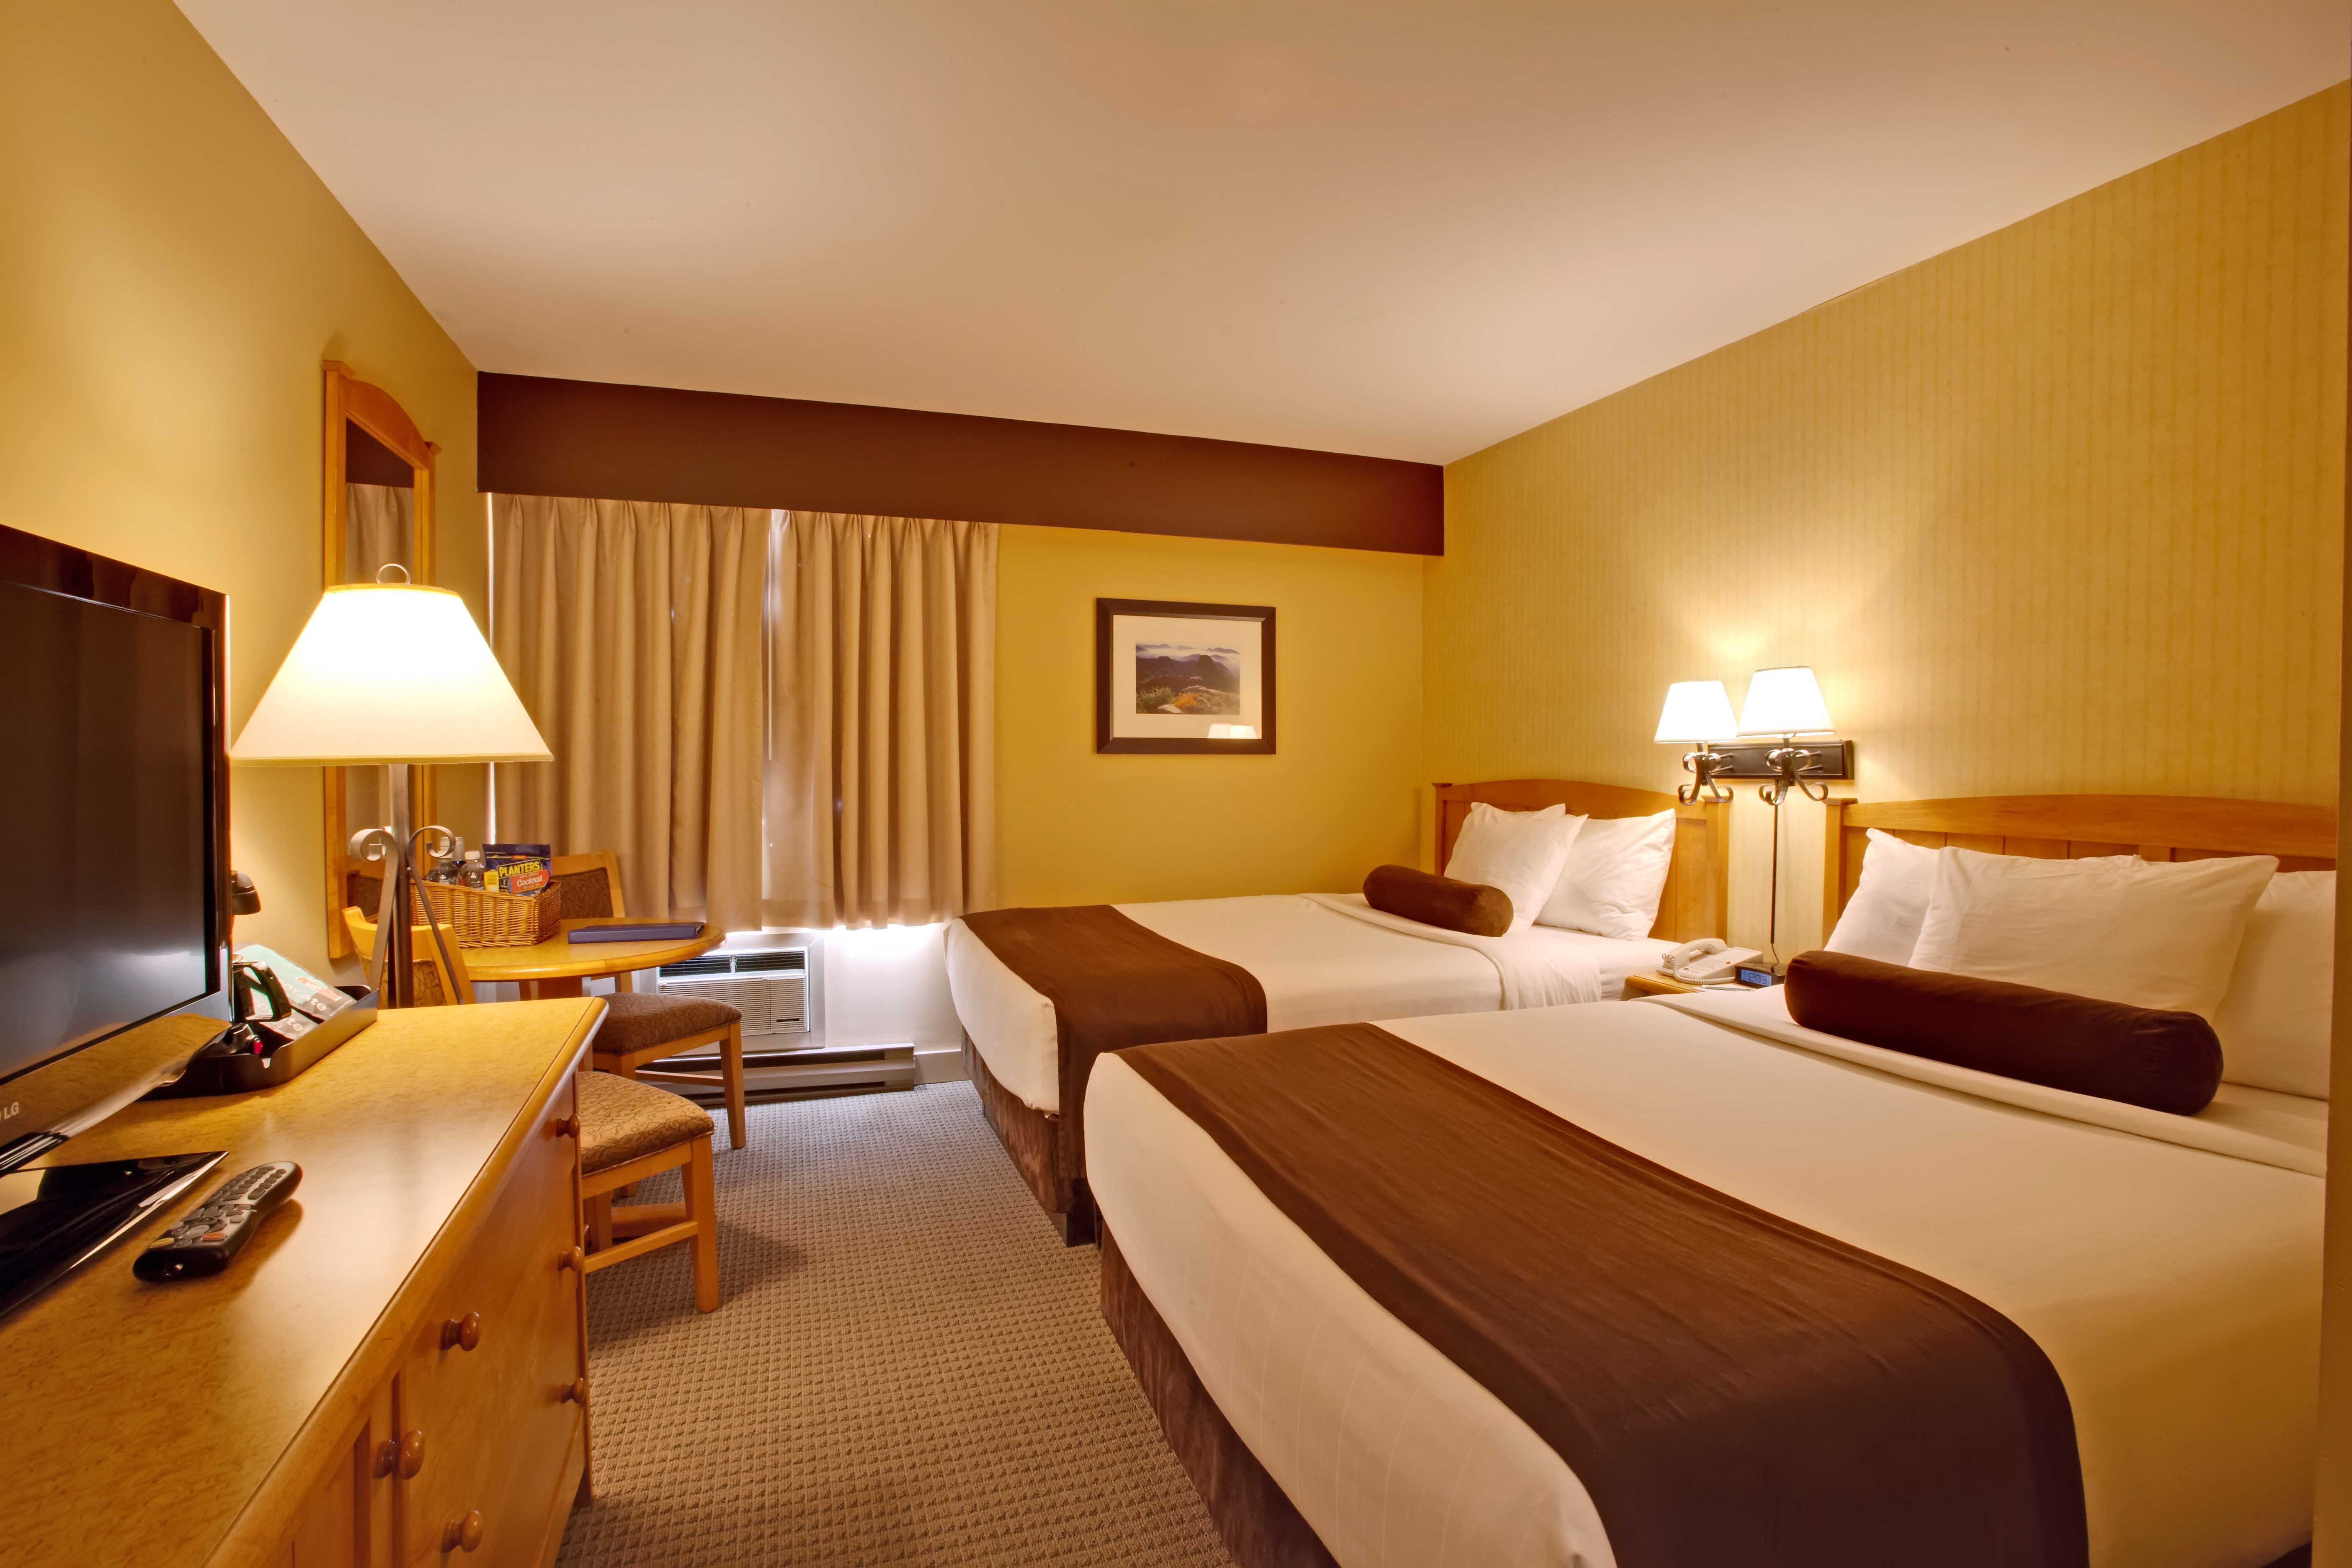 bedroom clipart hotel room